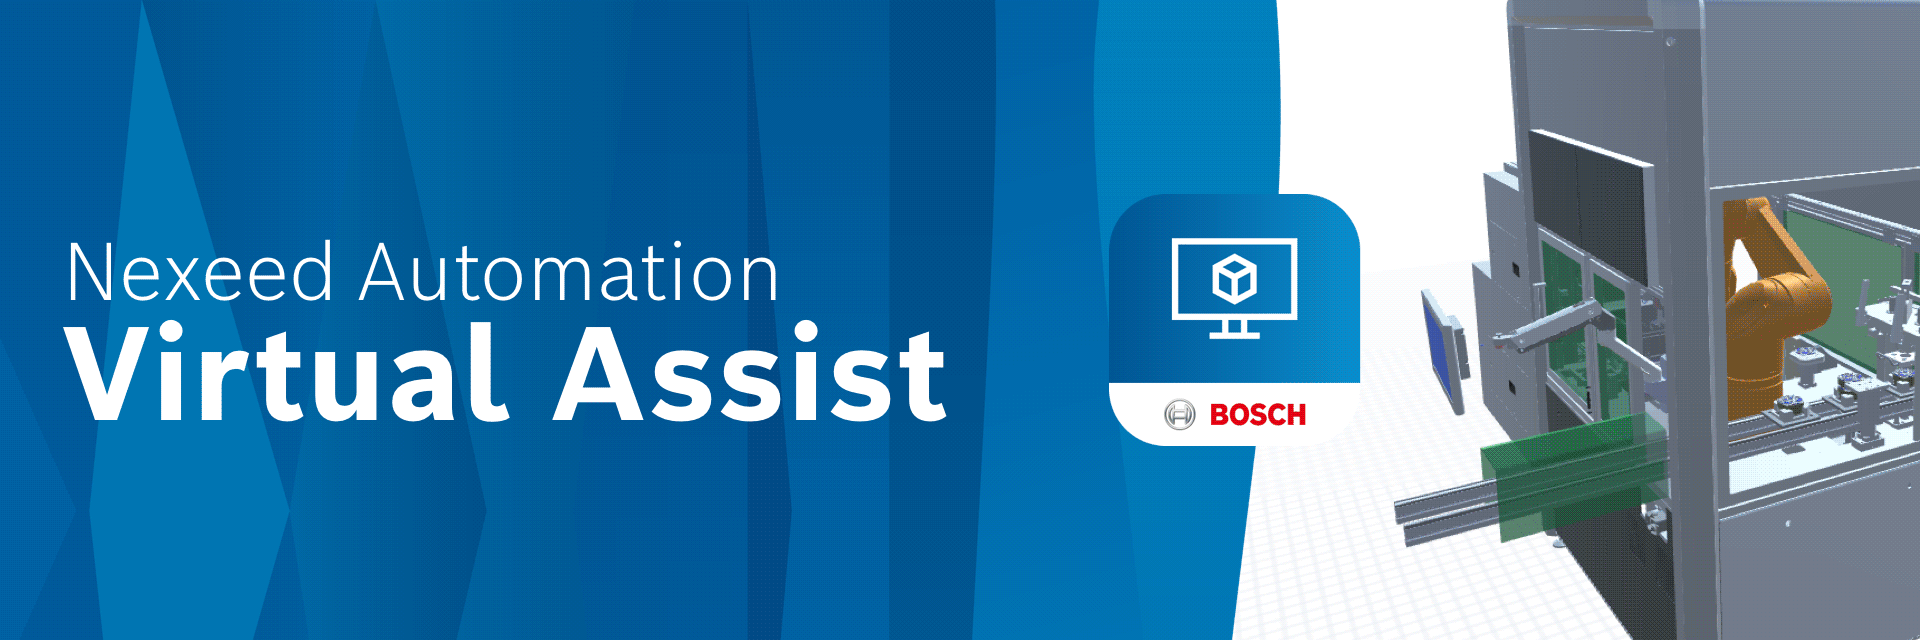 Bosch Connected Industry Nexeed Virtual Assist Studio